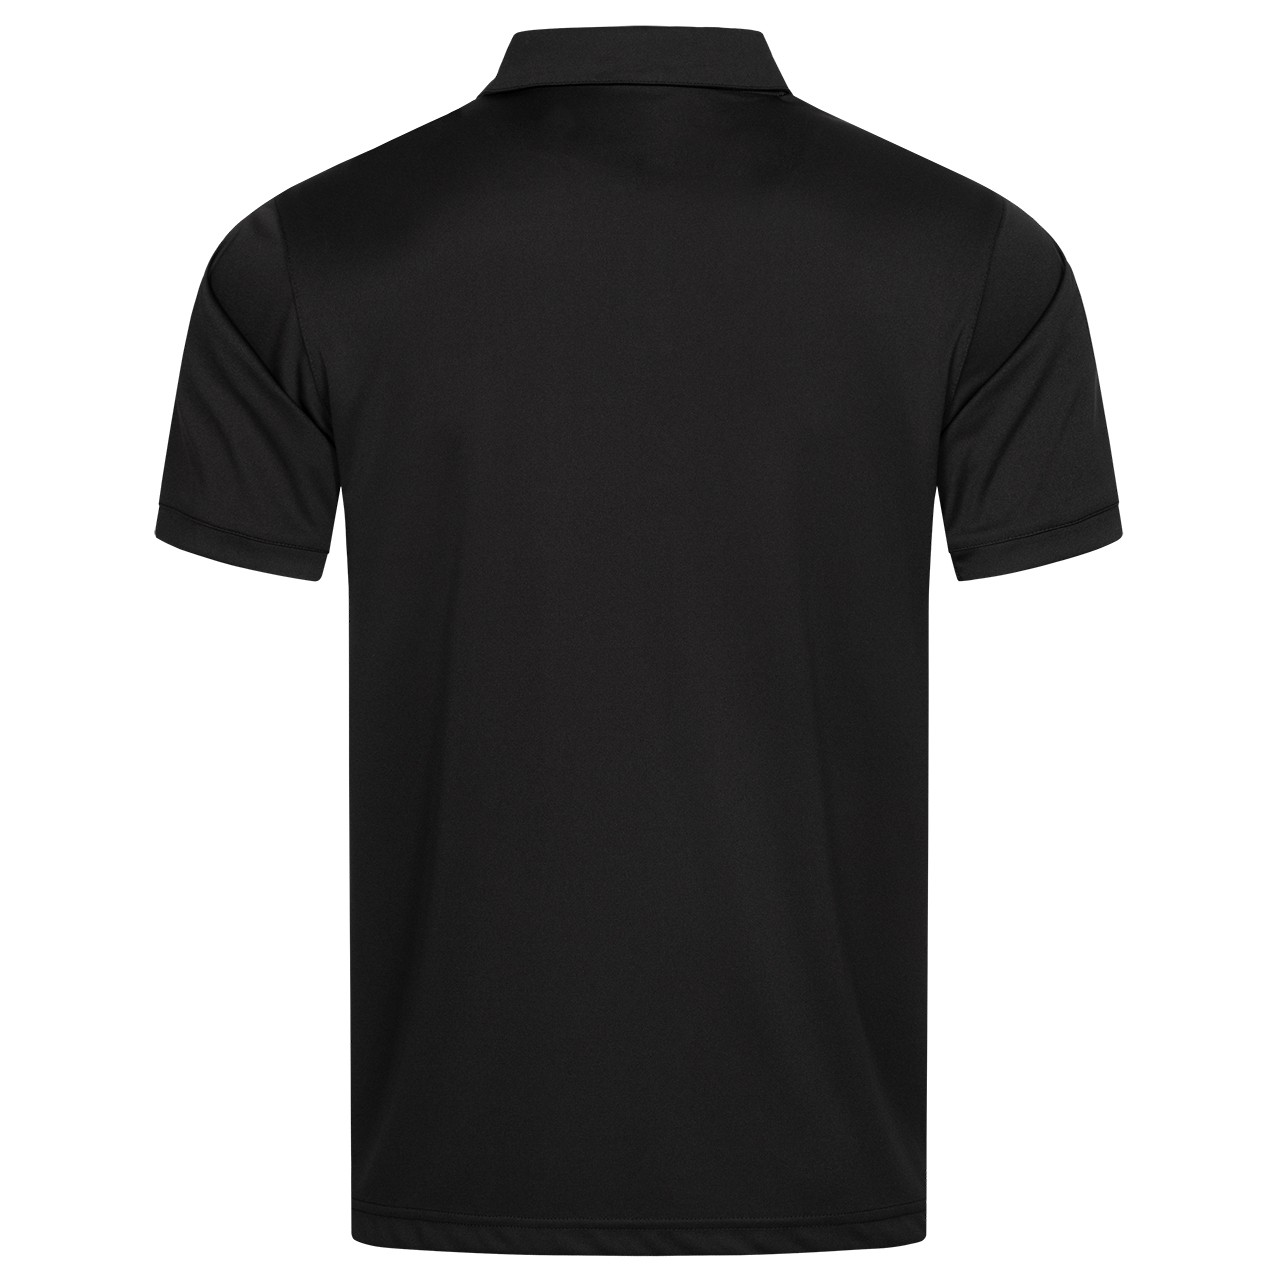 DONIC Shirt Effect black/grey | Tabletennis11.com (TT11)